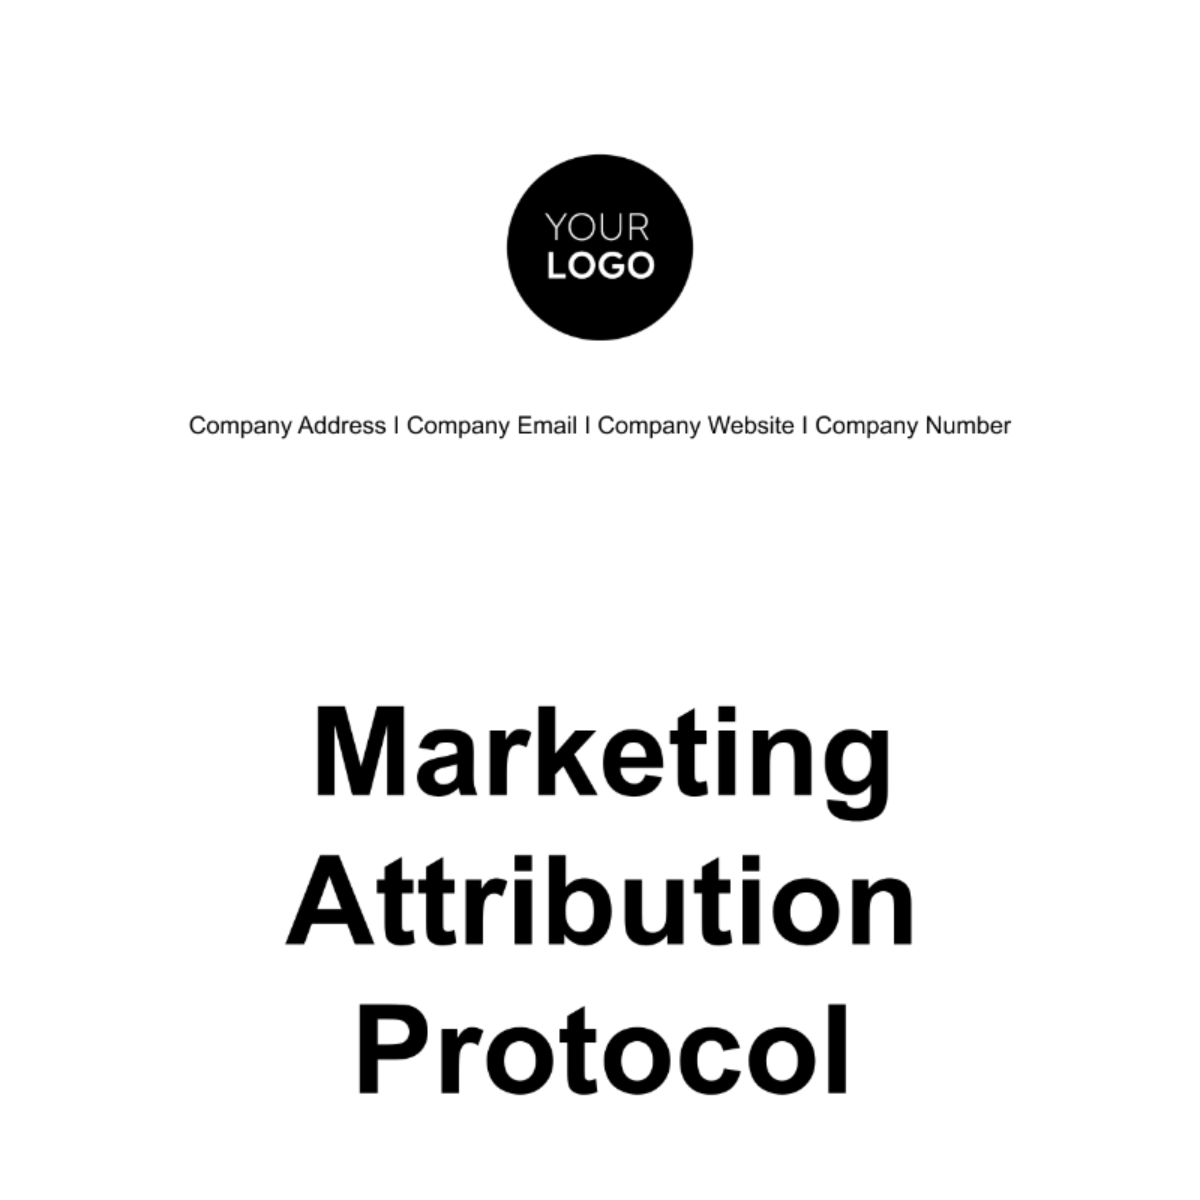 Marketing Attribution Protocol Template